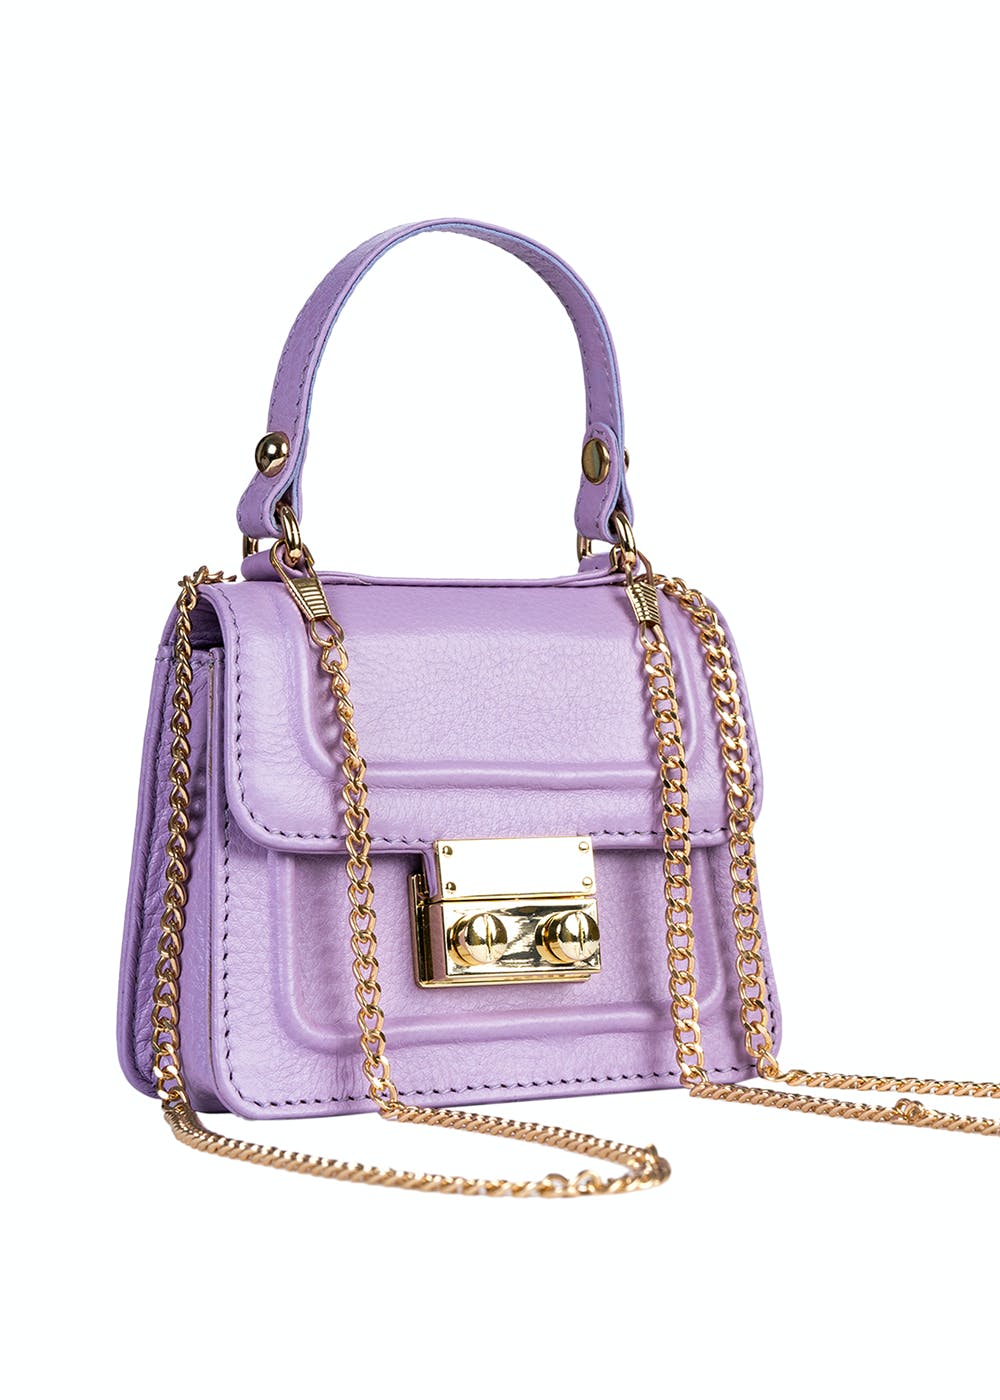 Buy Enakshi Japanese Shoulder Bag Large Capacity Fashion Vacation PU  Leather Handbag Purple Clothing Shoes  Accessories  Womens Handbags   Bags at Amazonin